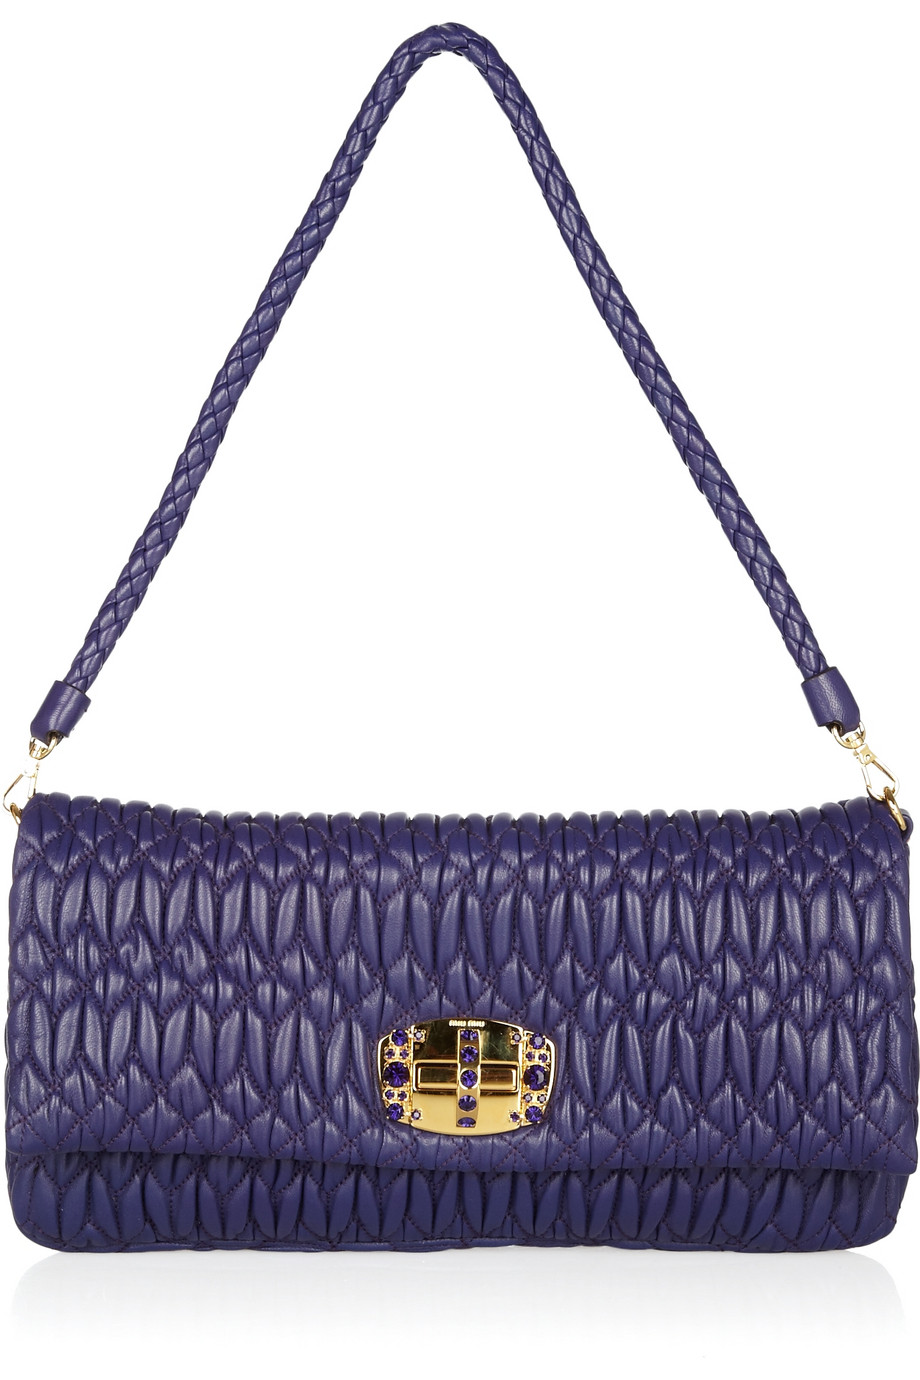 Miu Miu Crystal Chain Strap Matelassé Leather Shoulder Bag in Purple - Lyst